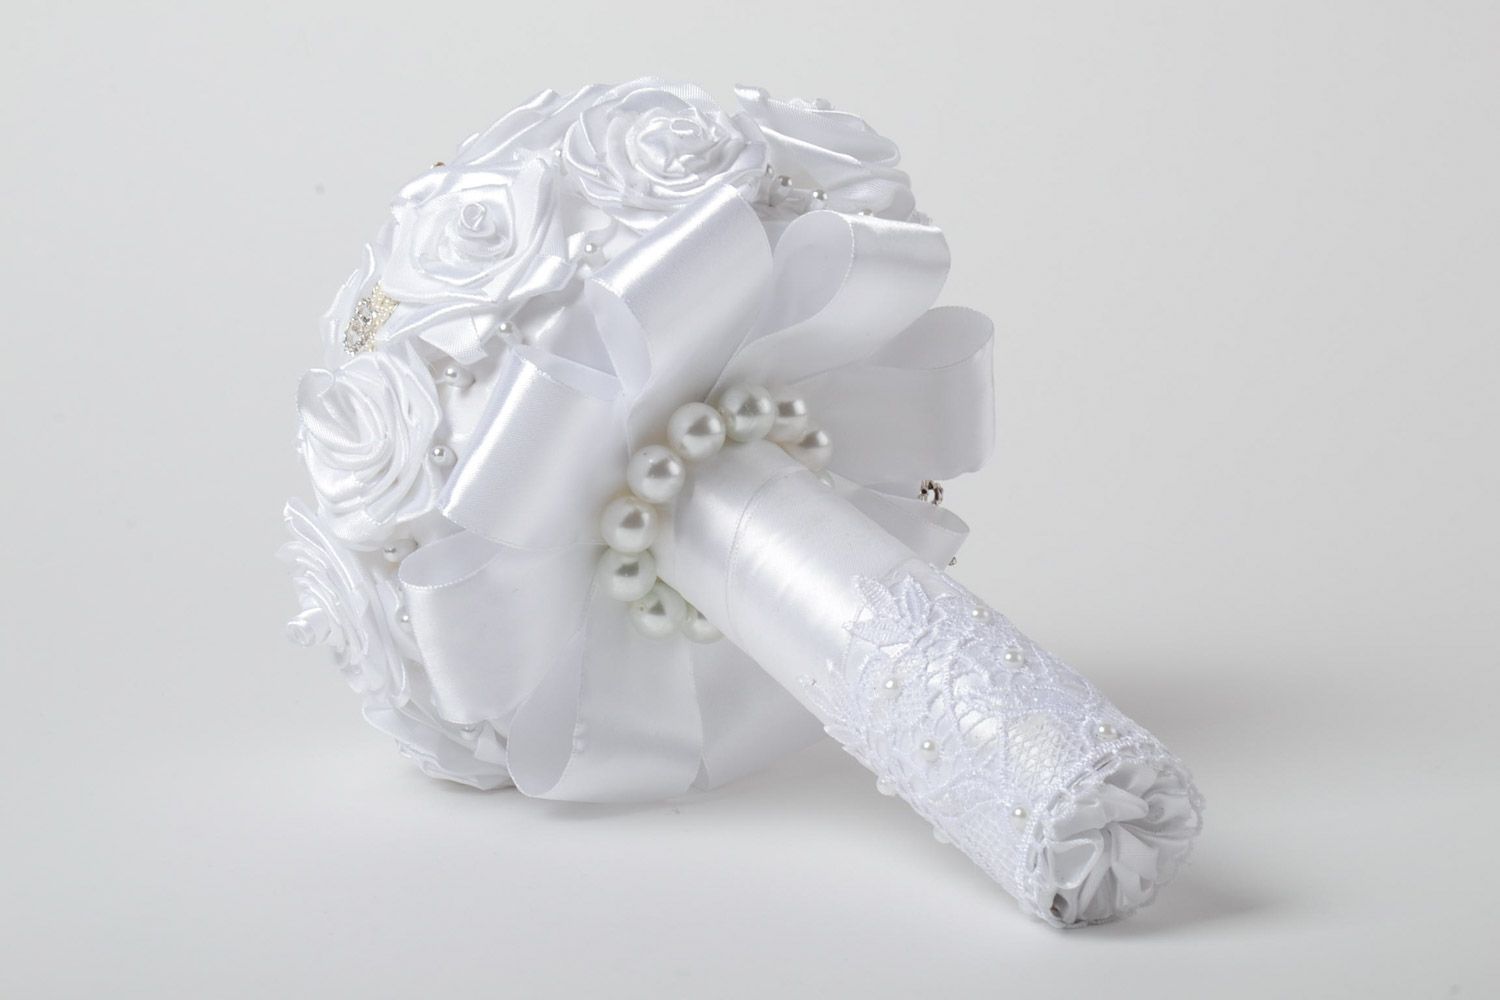 Snow white festive handmade wedding bouquet with satin ribbon flowers photo 3